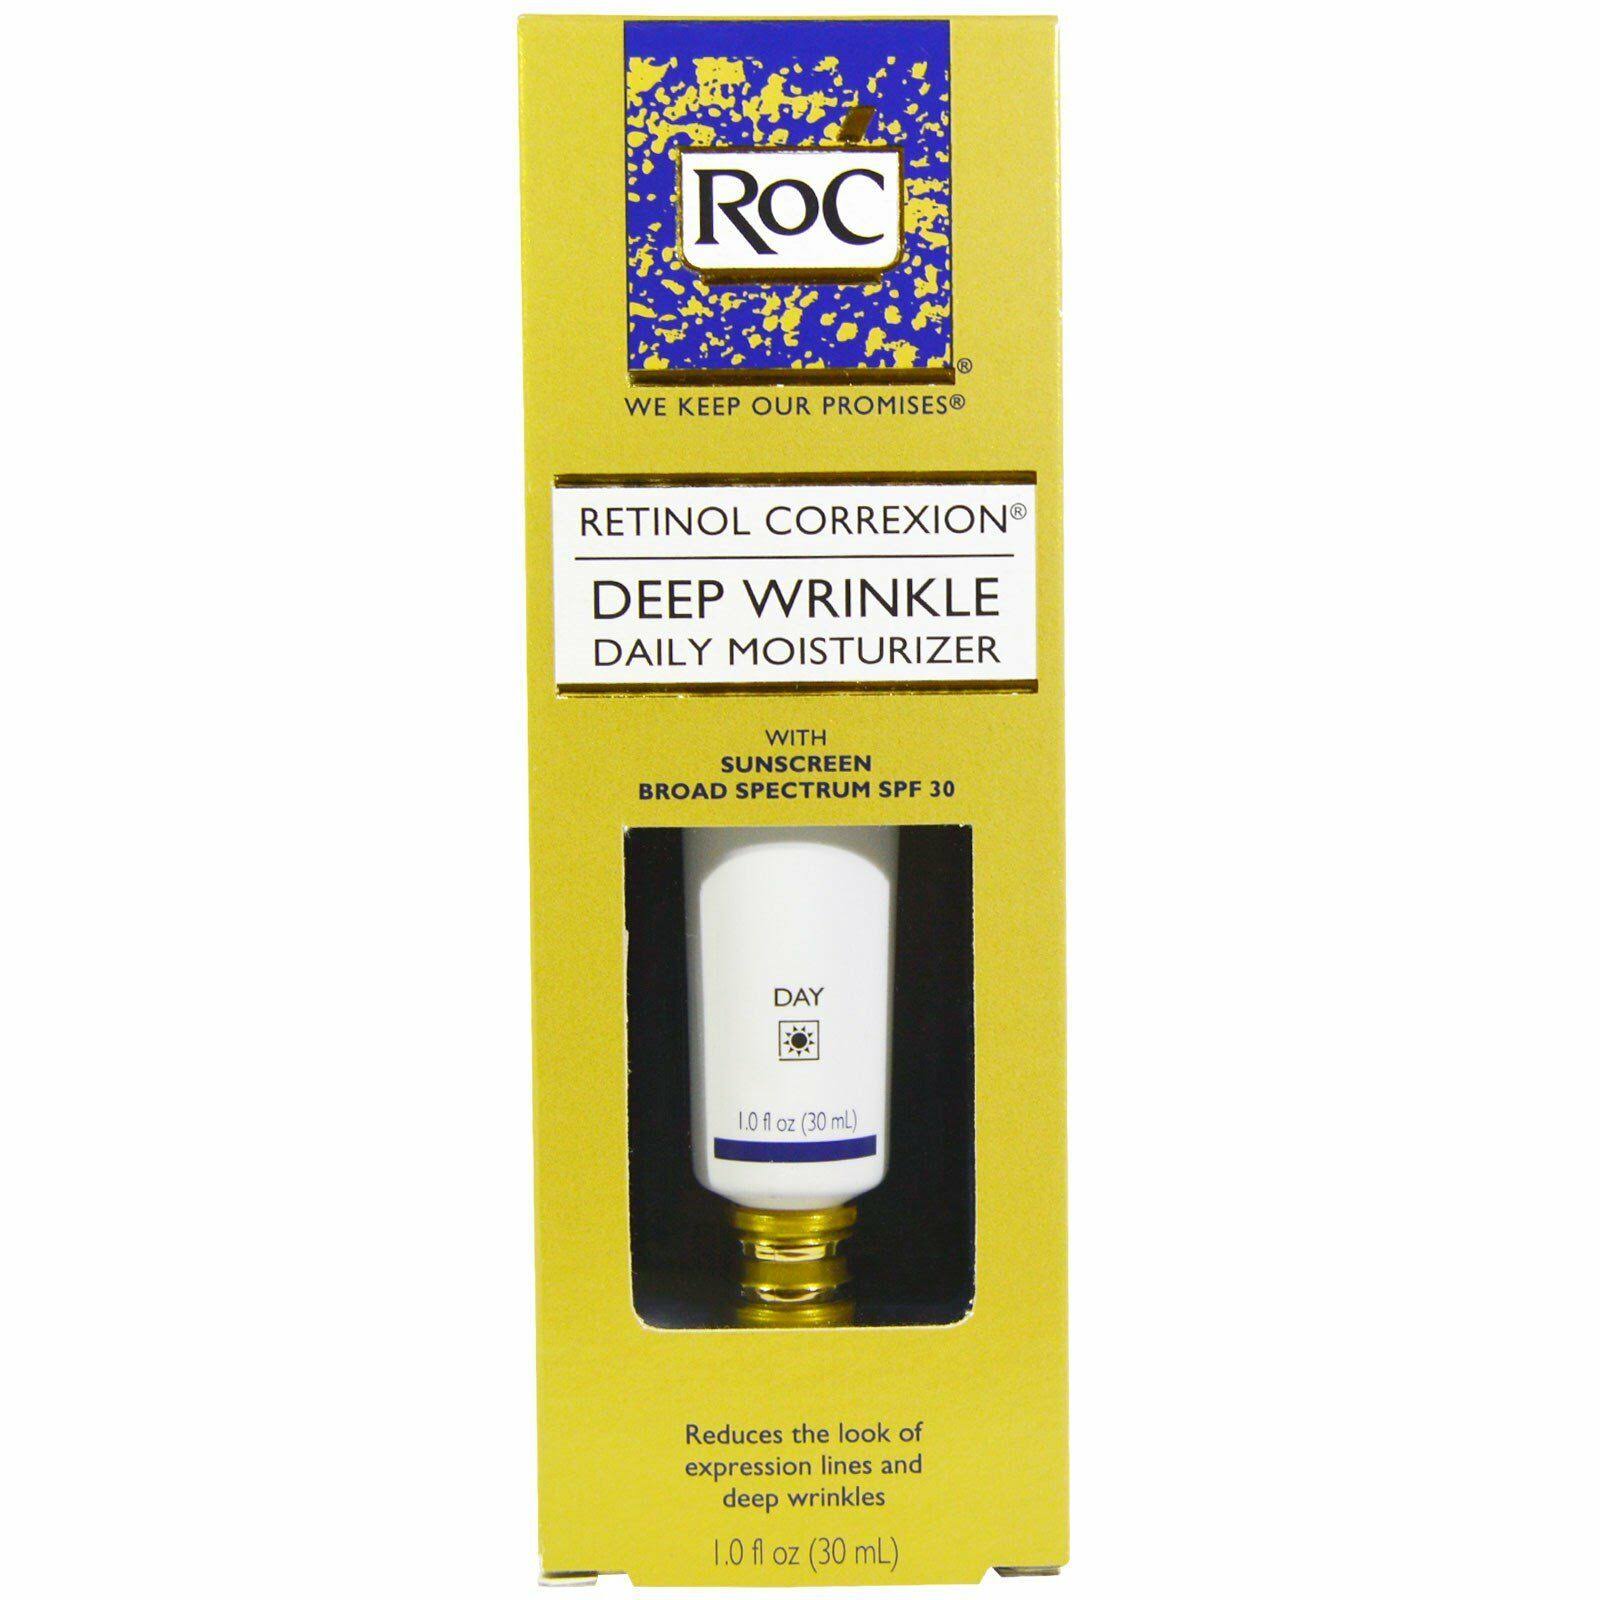 RoC Retinol Correxion Deep Wrinkle Daily Moisturizer - SPF 30, 1oz